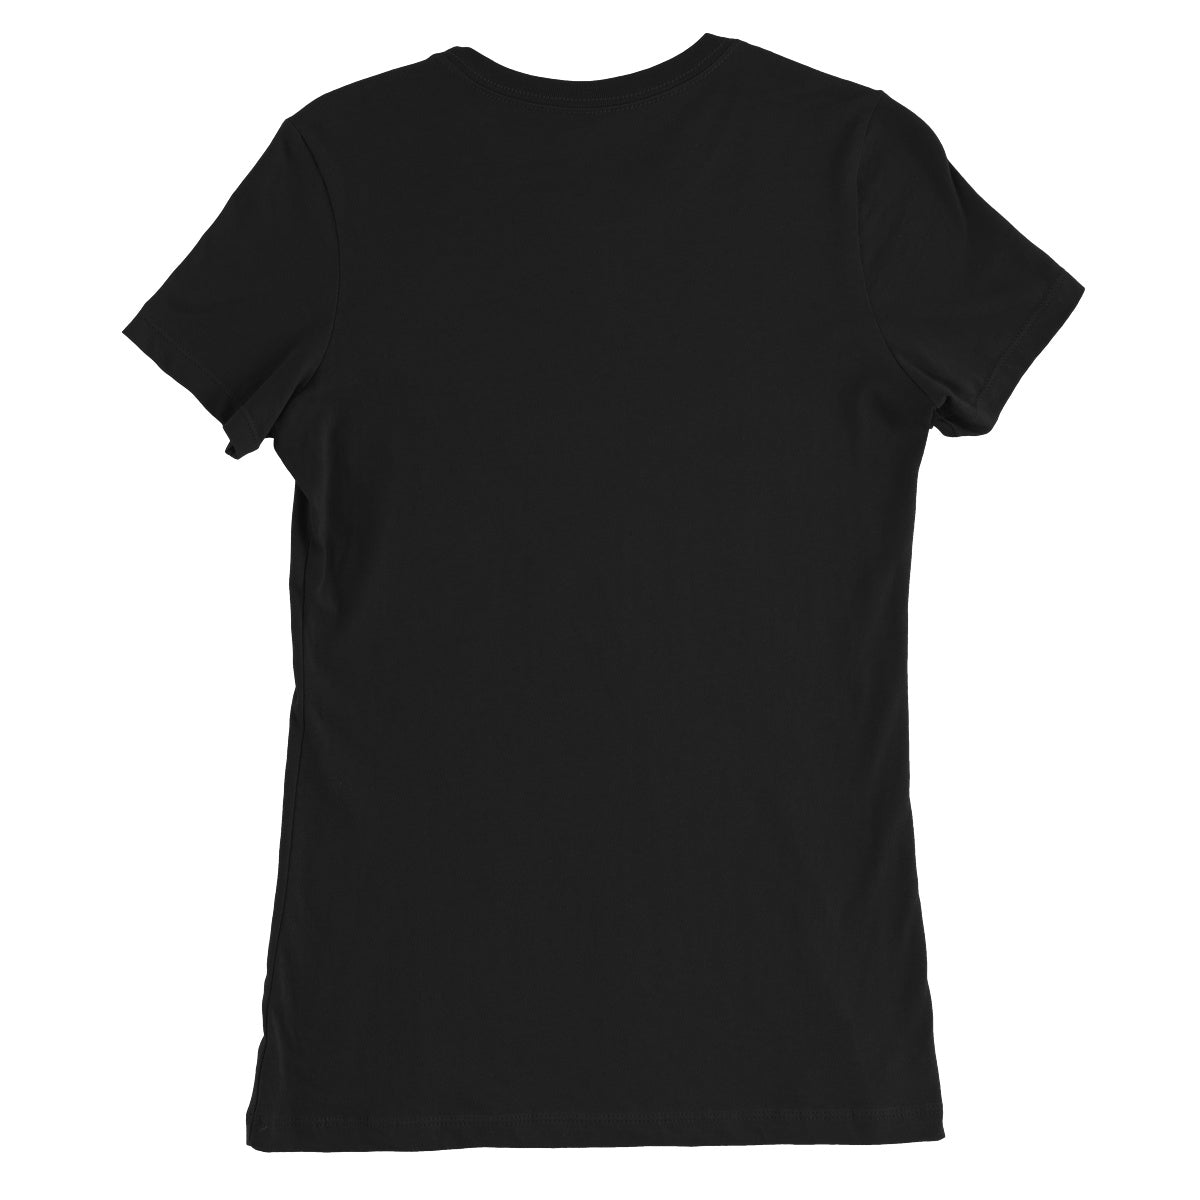 Lockdown 2020 Women's Favourite T-Shirt